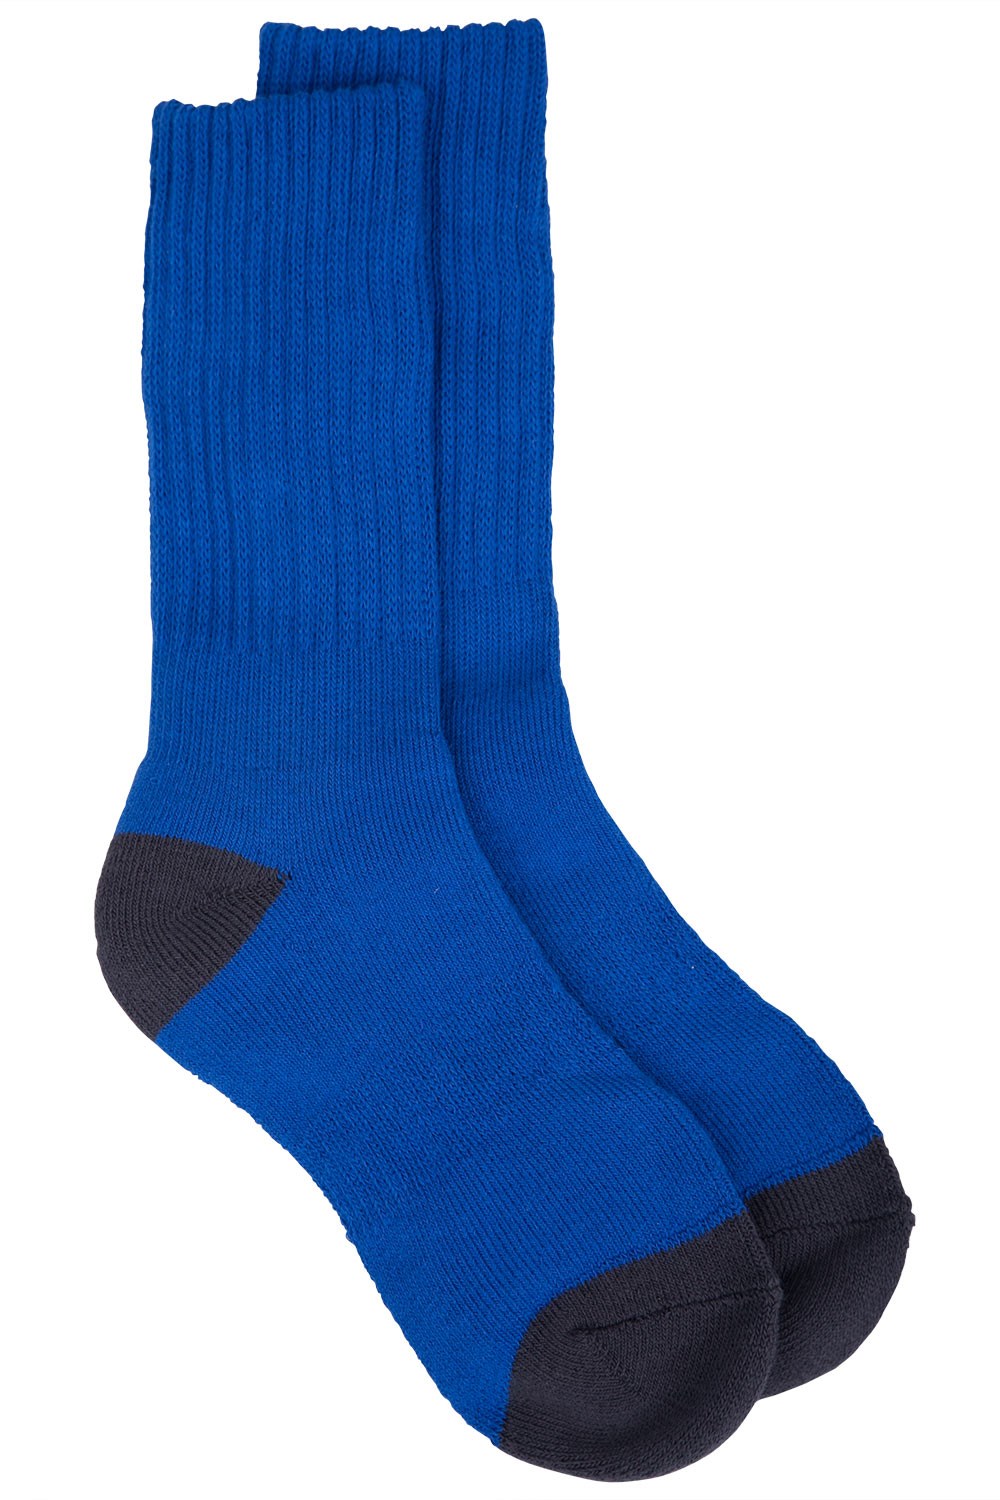 Mountain Warehouse Double Layer Kids Socks | eBay